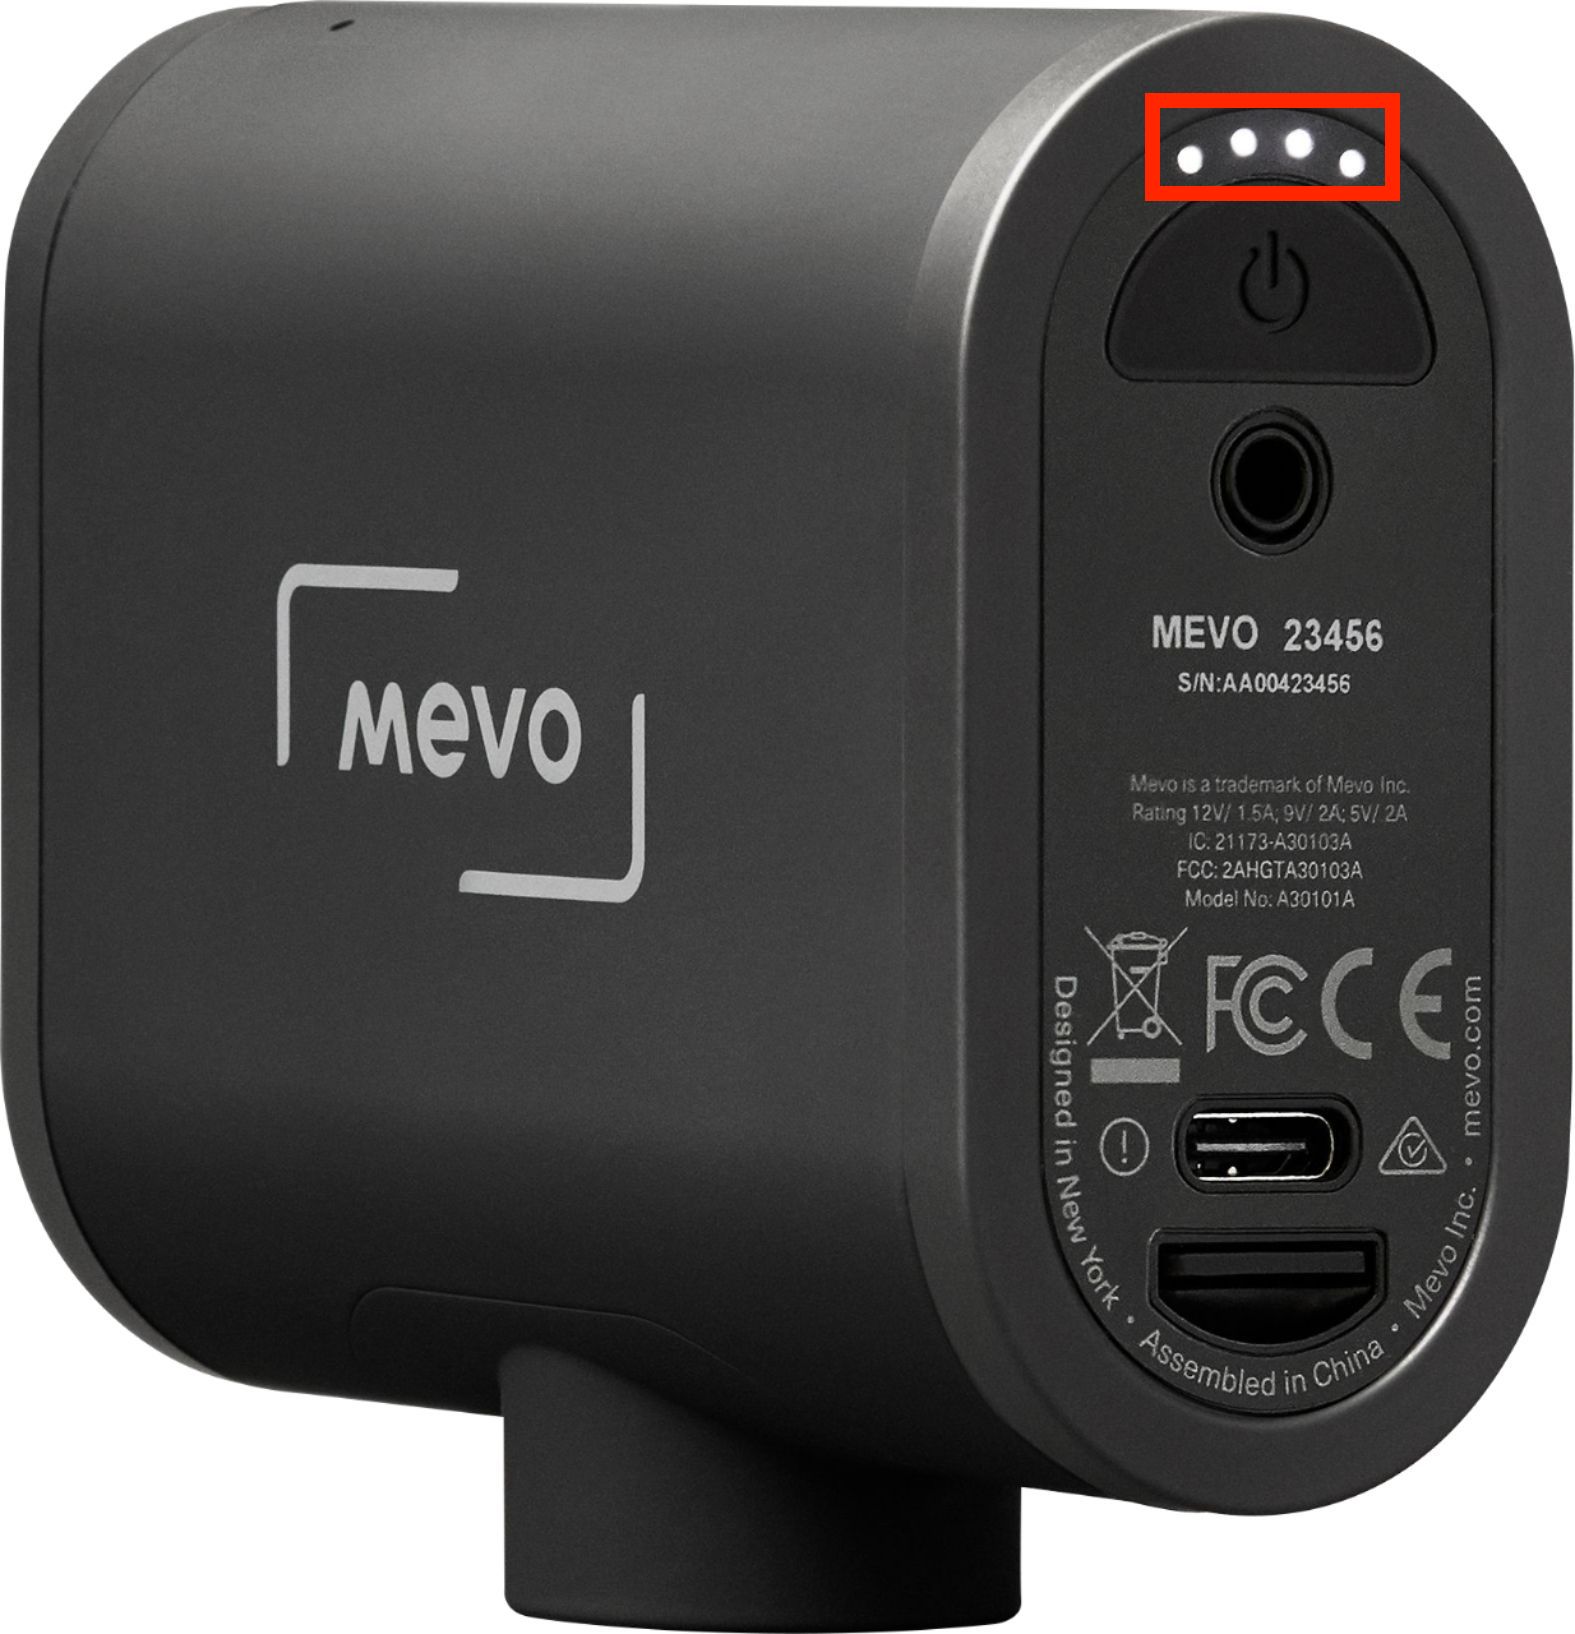 mevo app switch to lightning audio input